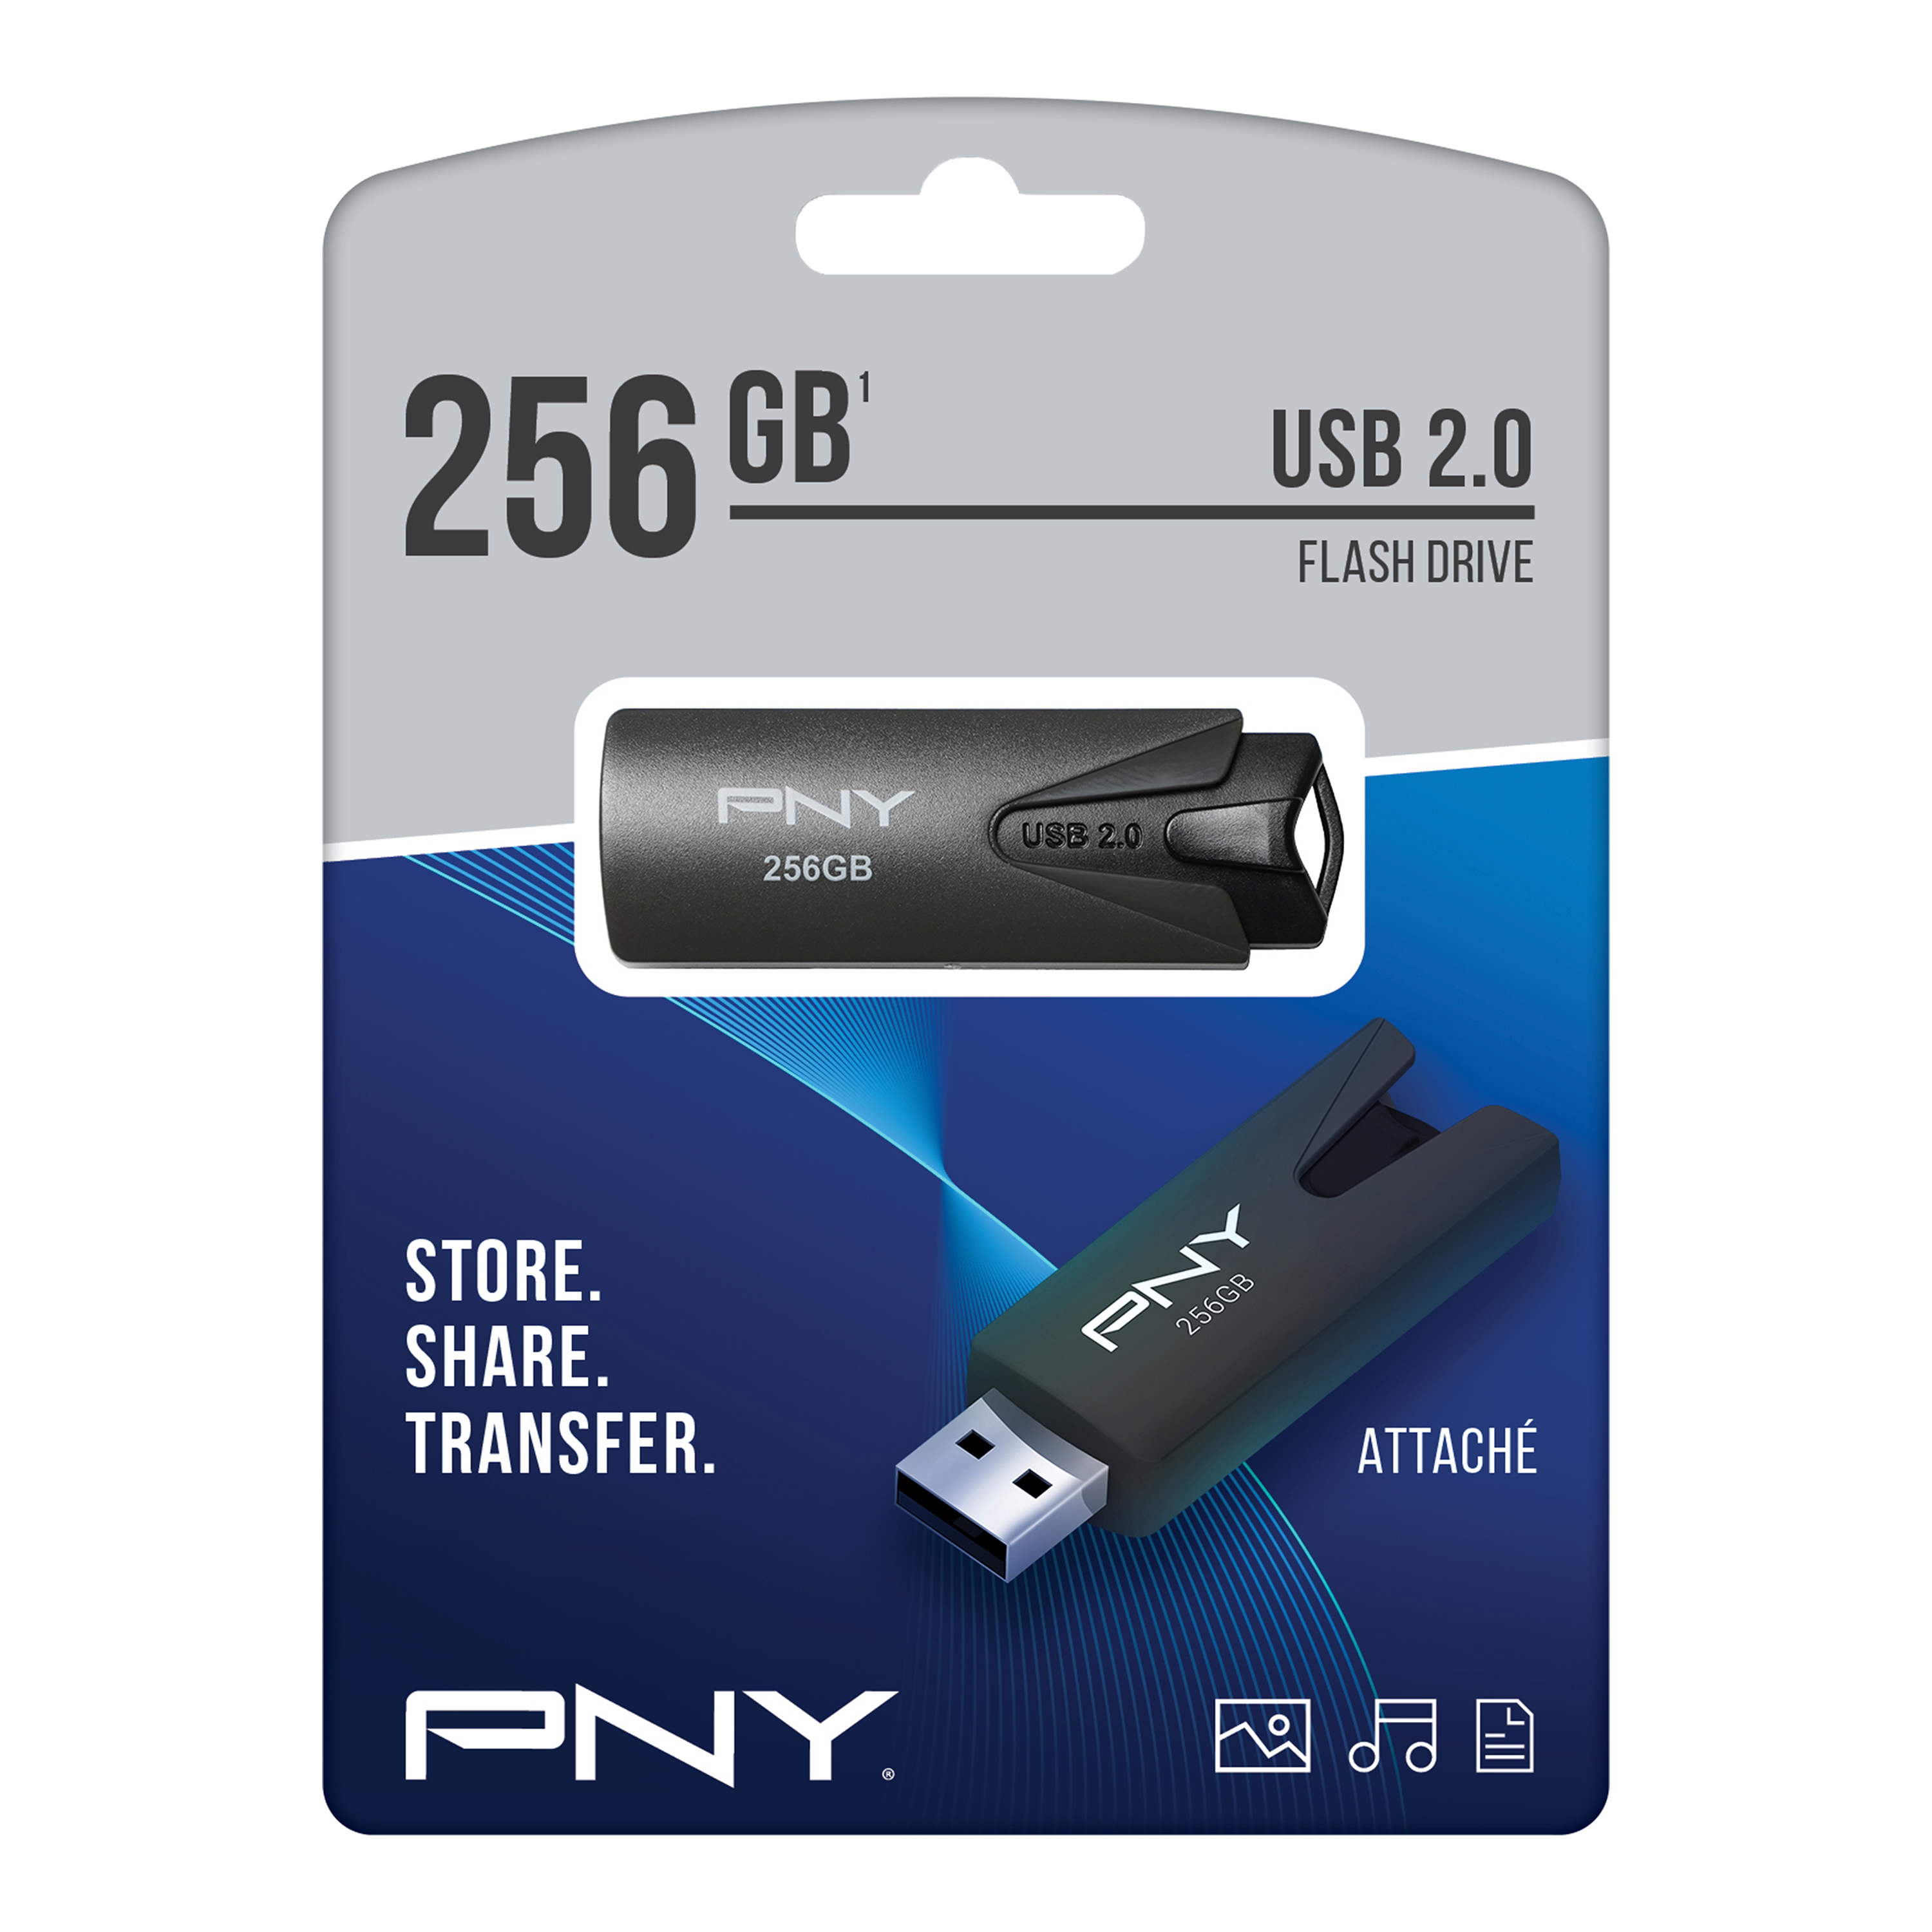 PNY 256GB Attache USB 2.0 Flash Drive - image 3 of 8